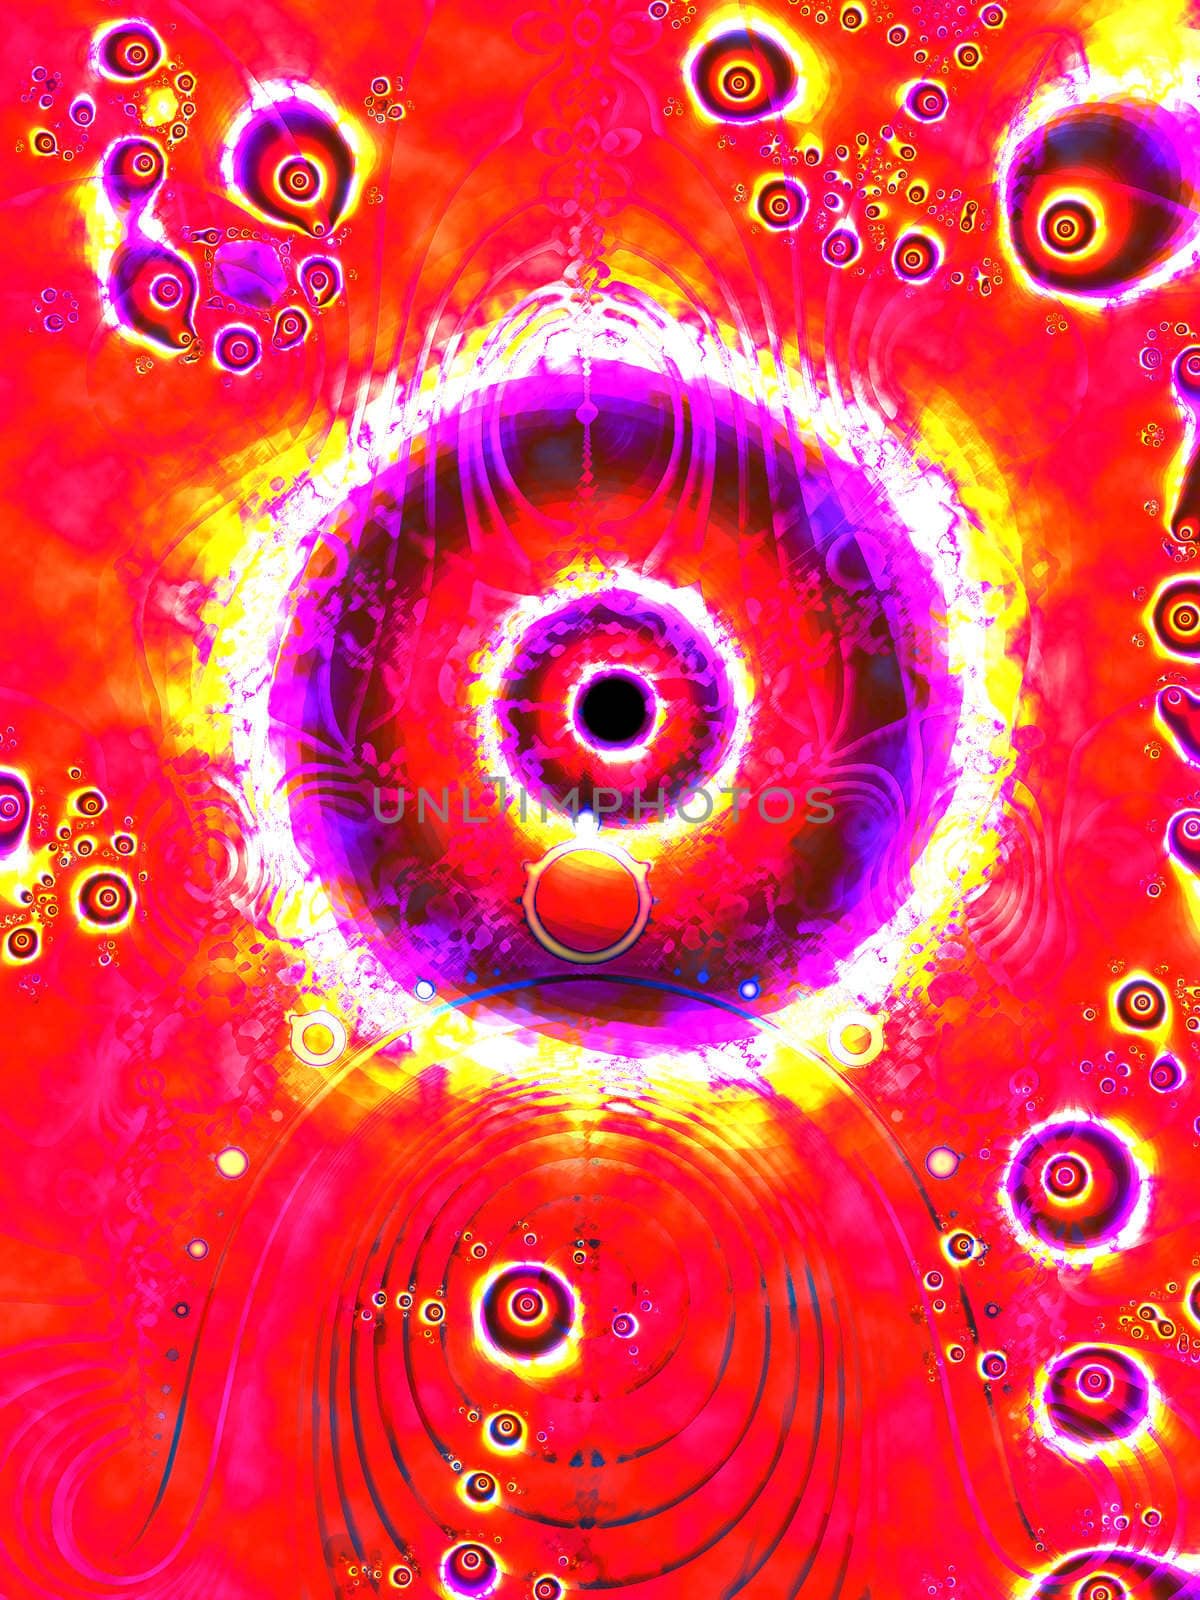 Bright Pink Eye Circle Fractal Design With Black Pupil by bobbigmac